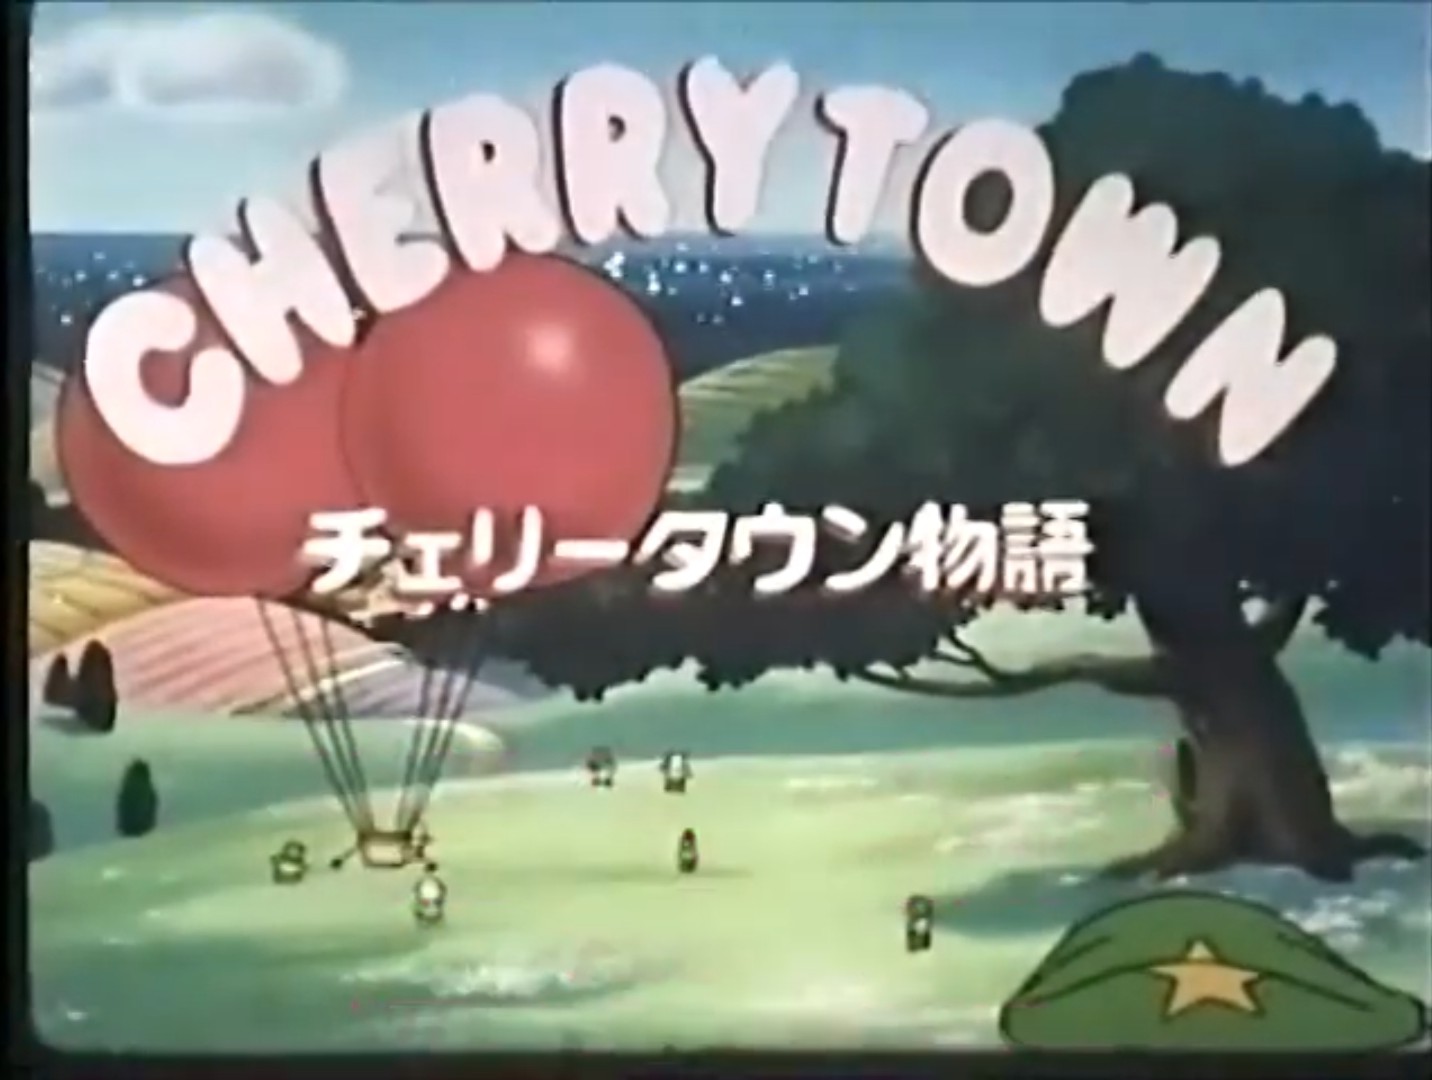 Cherry Town - Cherry Town aka "Cherry Town Monogatari" (found amusement park-exclusive anime short film; 1989)